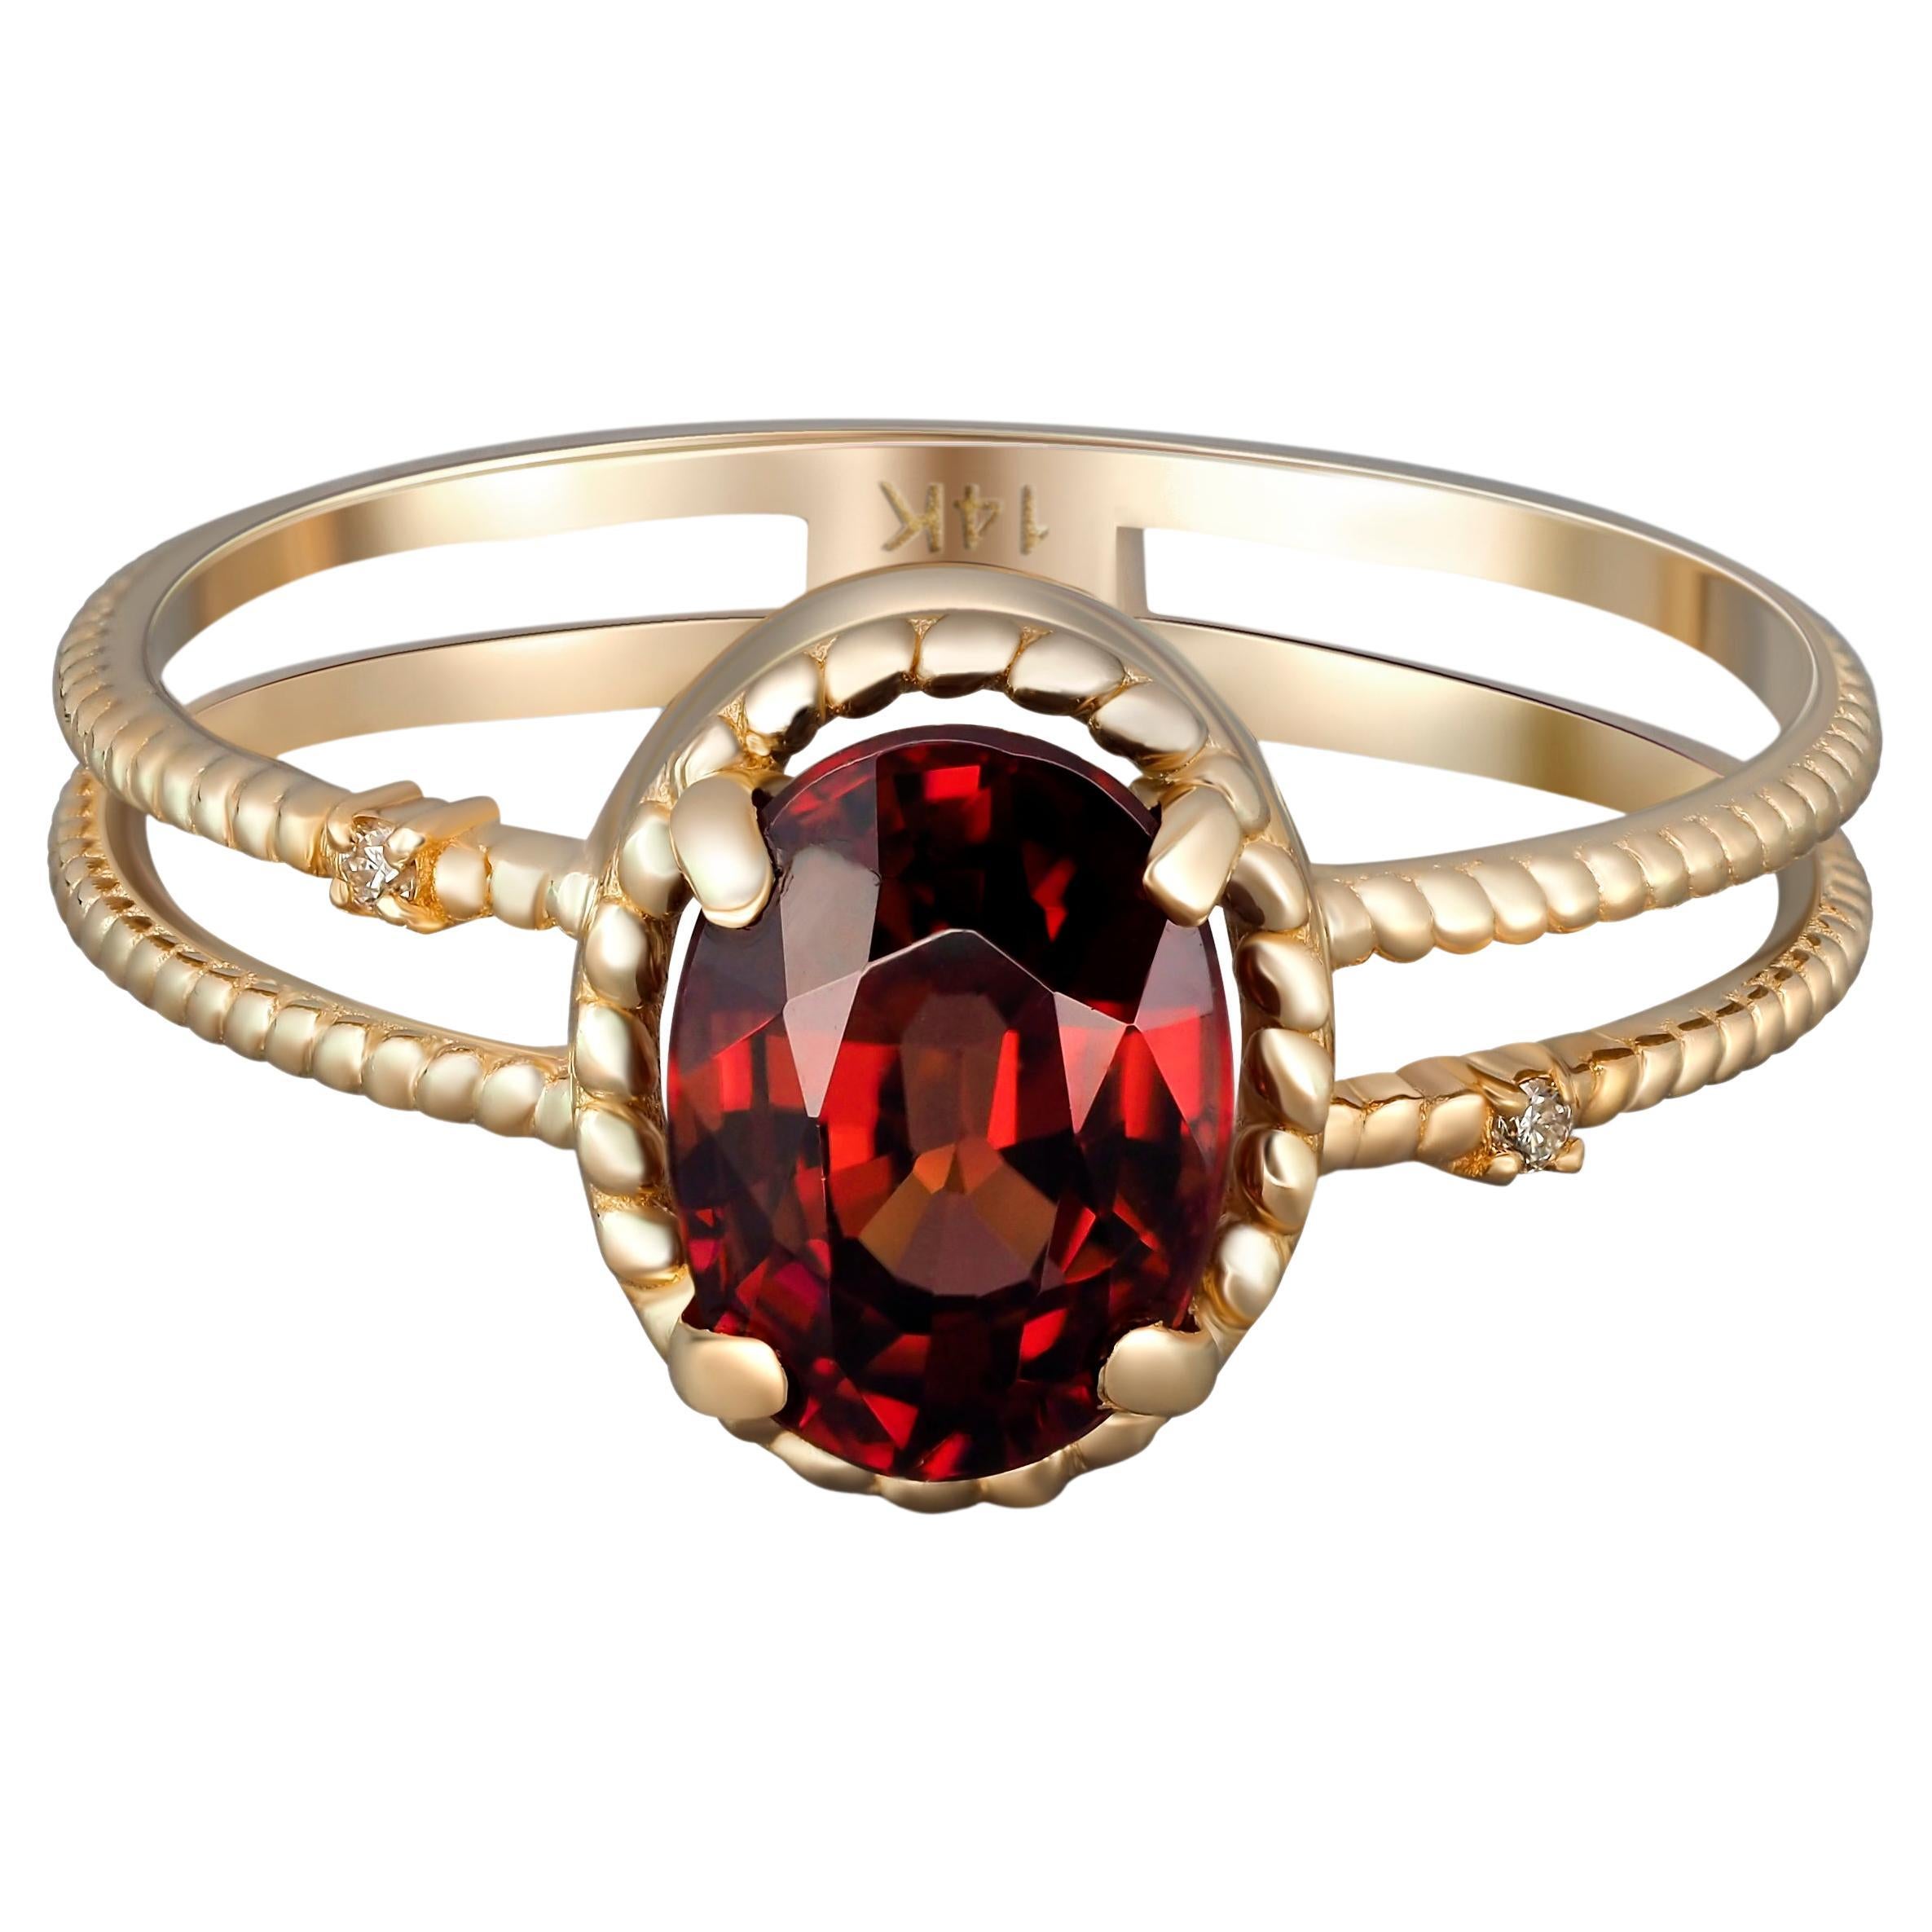 For Sale:  Garnet Gold Ring, Oval Garnet Ring, 14k Gold Ring with Garnet